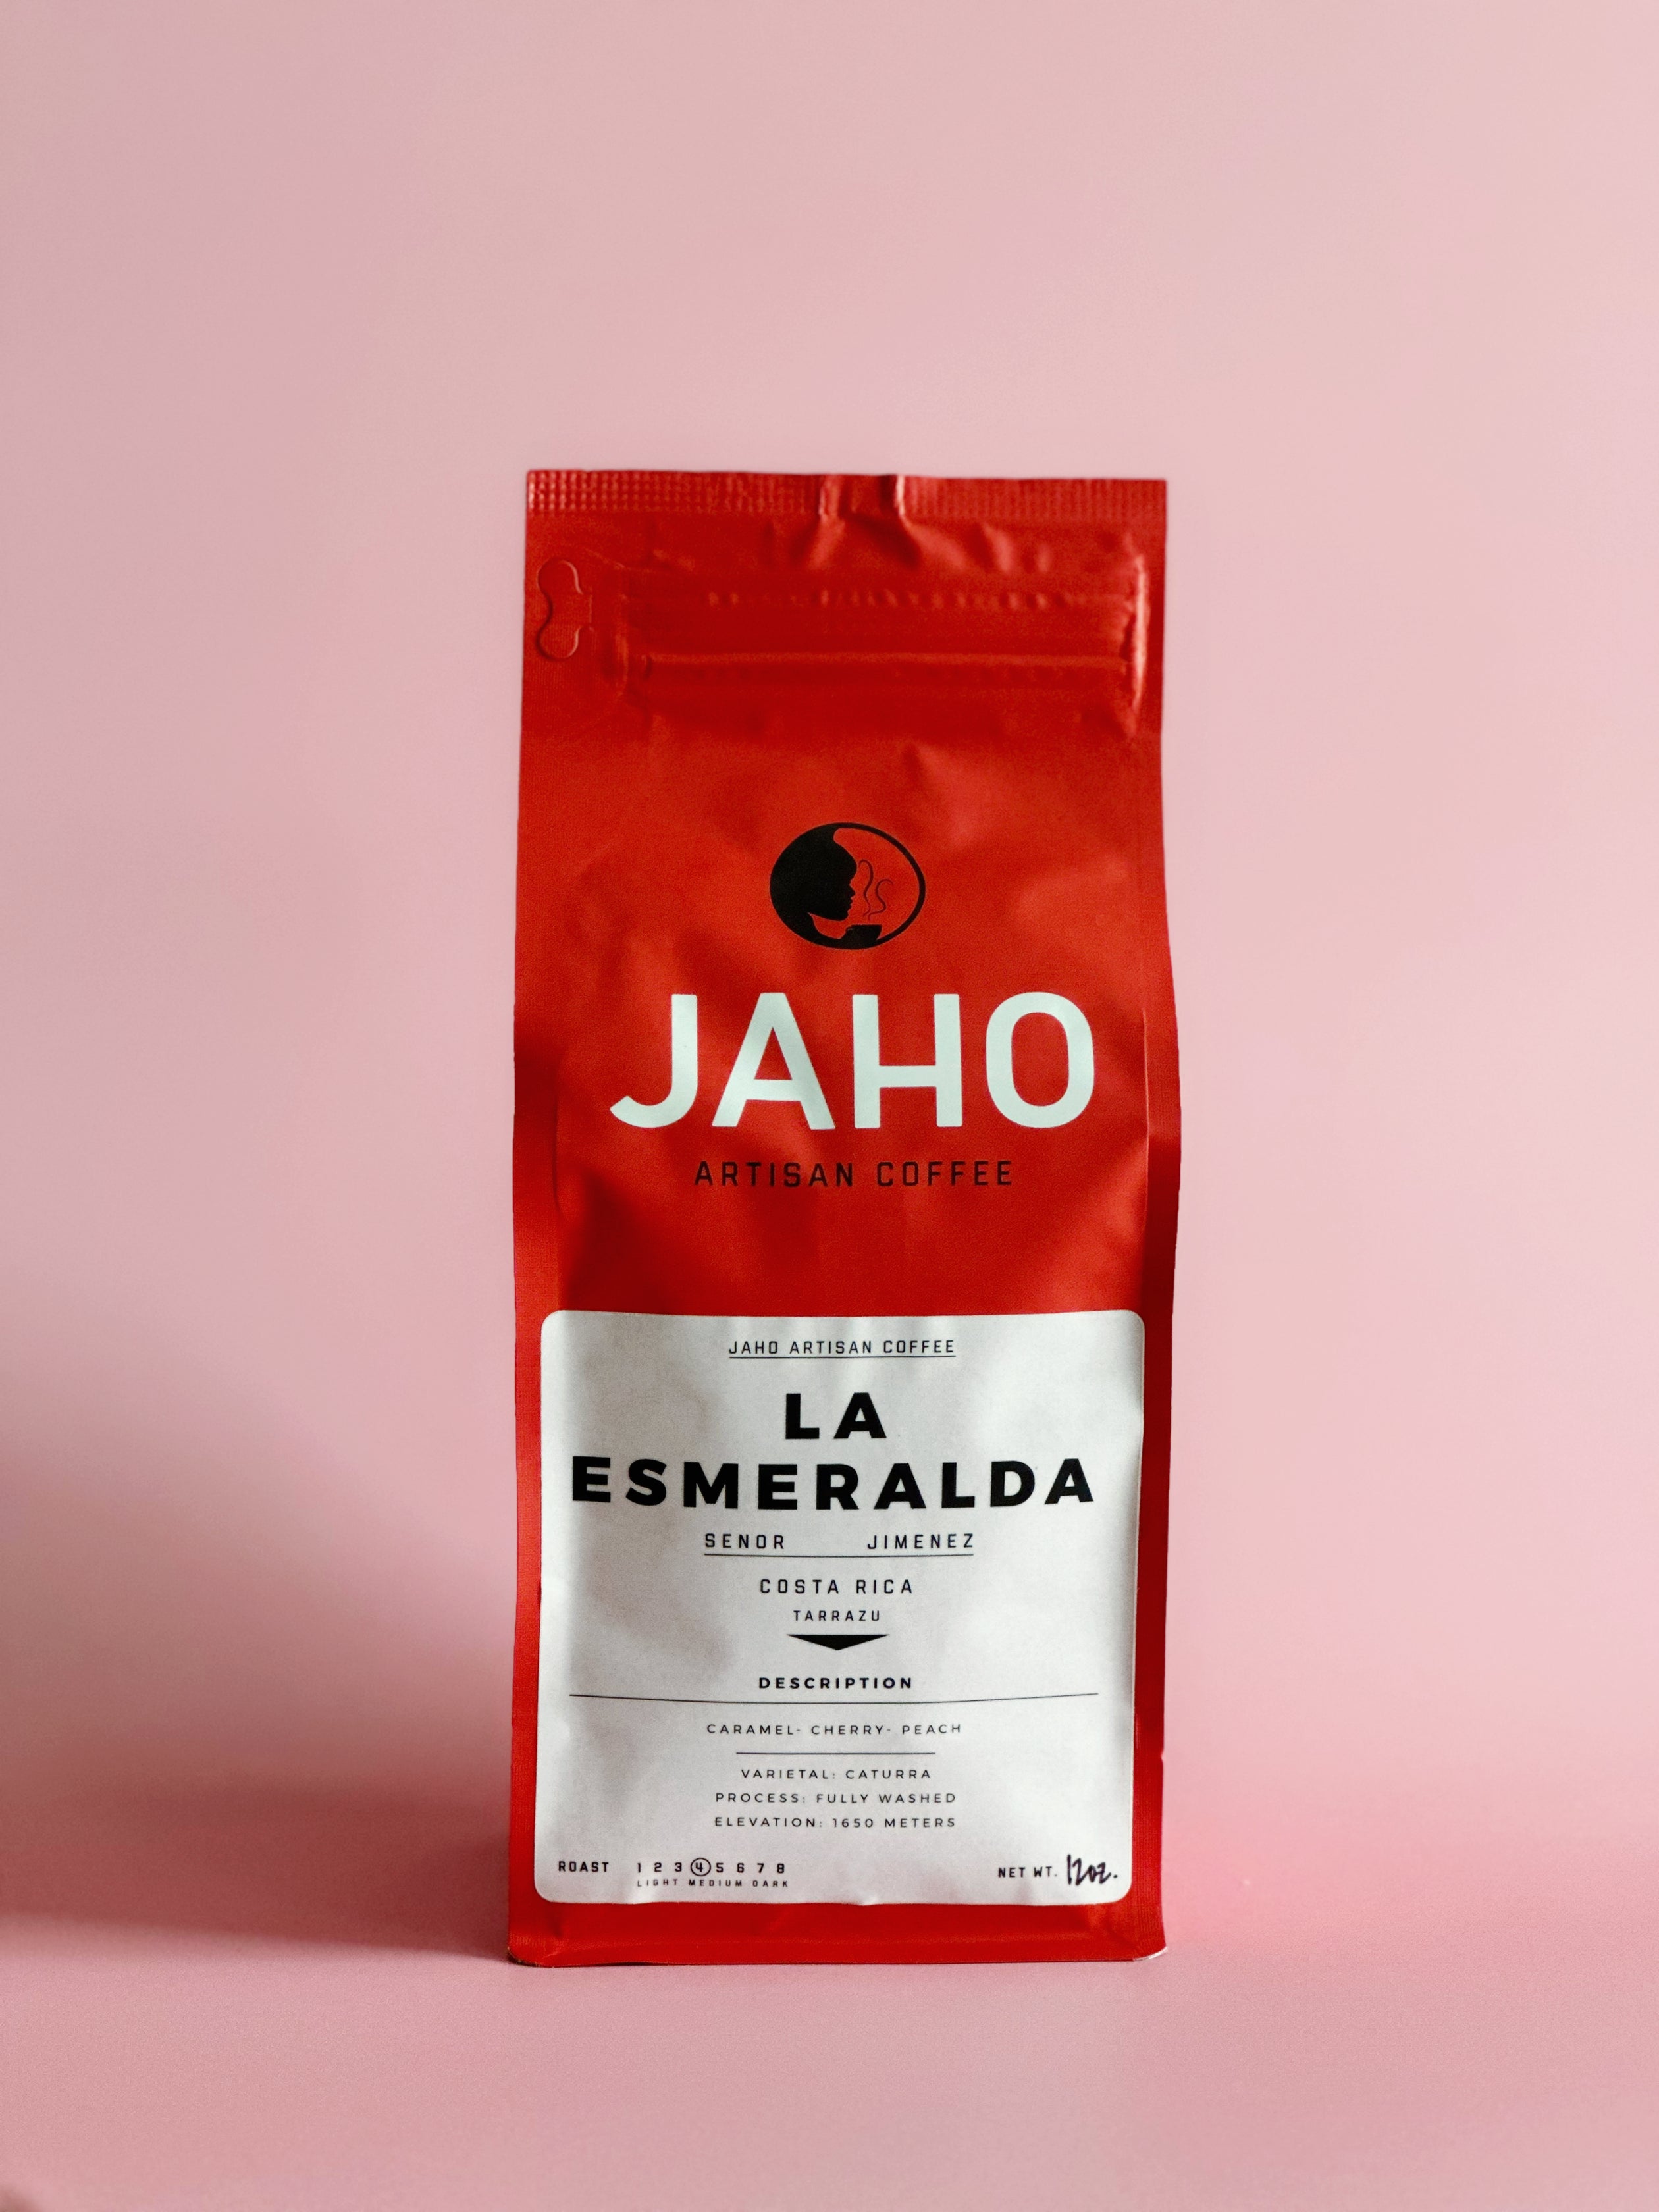 Costa Rica Tarrazu - La Esmeralda Señor Jimenez - Jaho Coffee Roaster